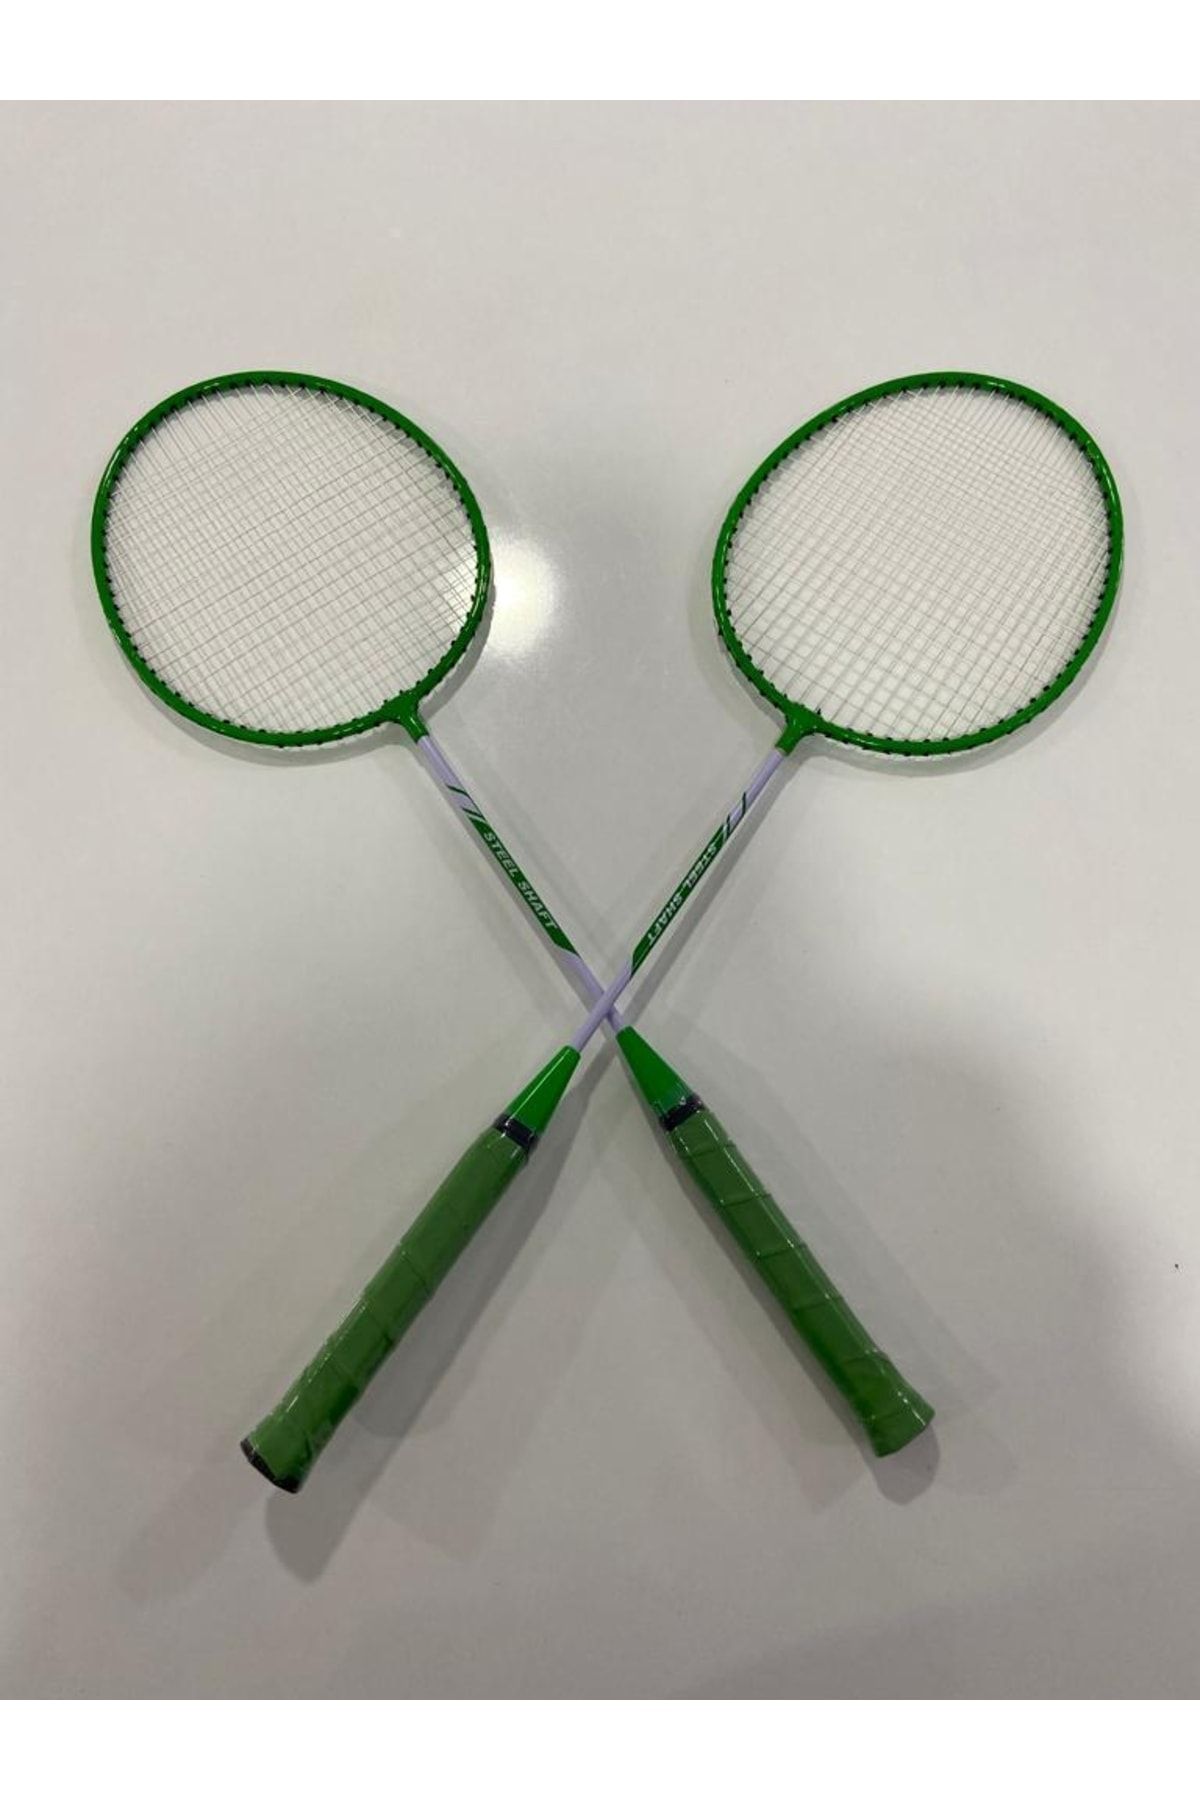 CANSPORT Badminton Raketi